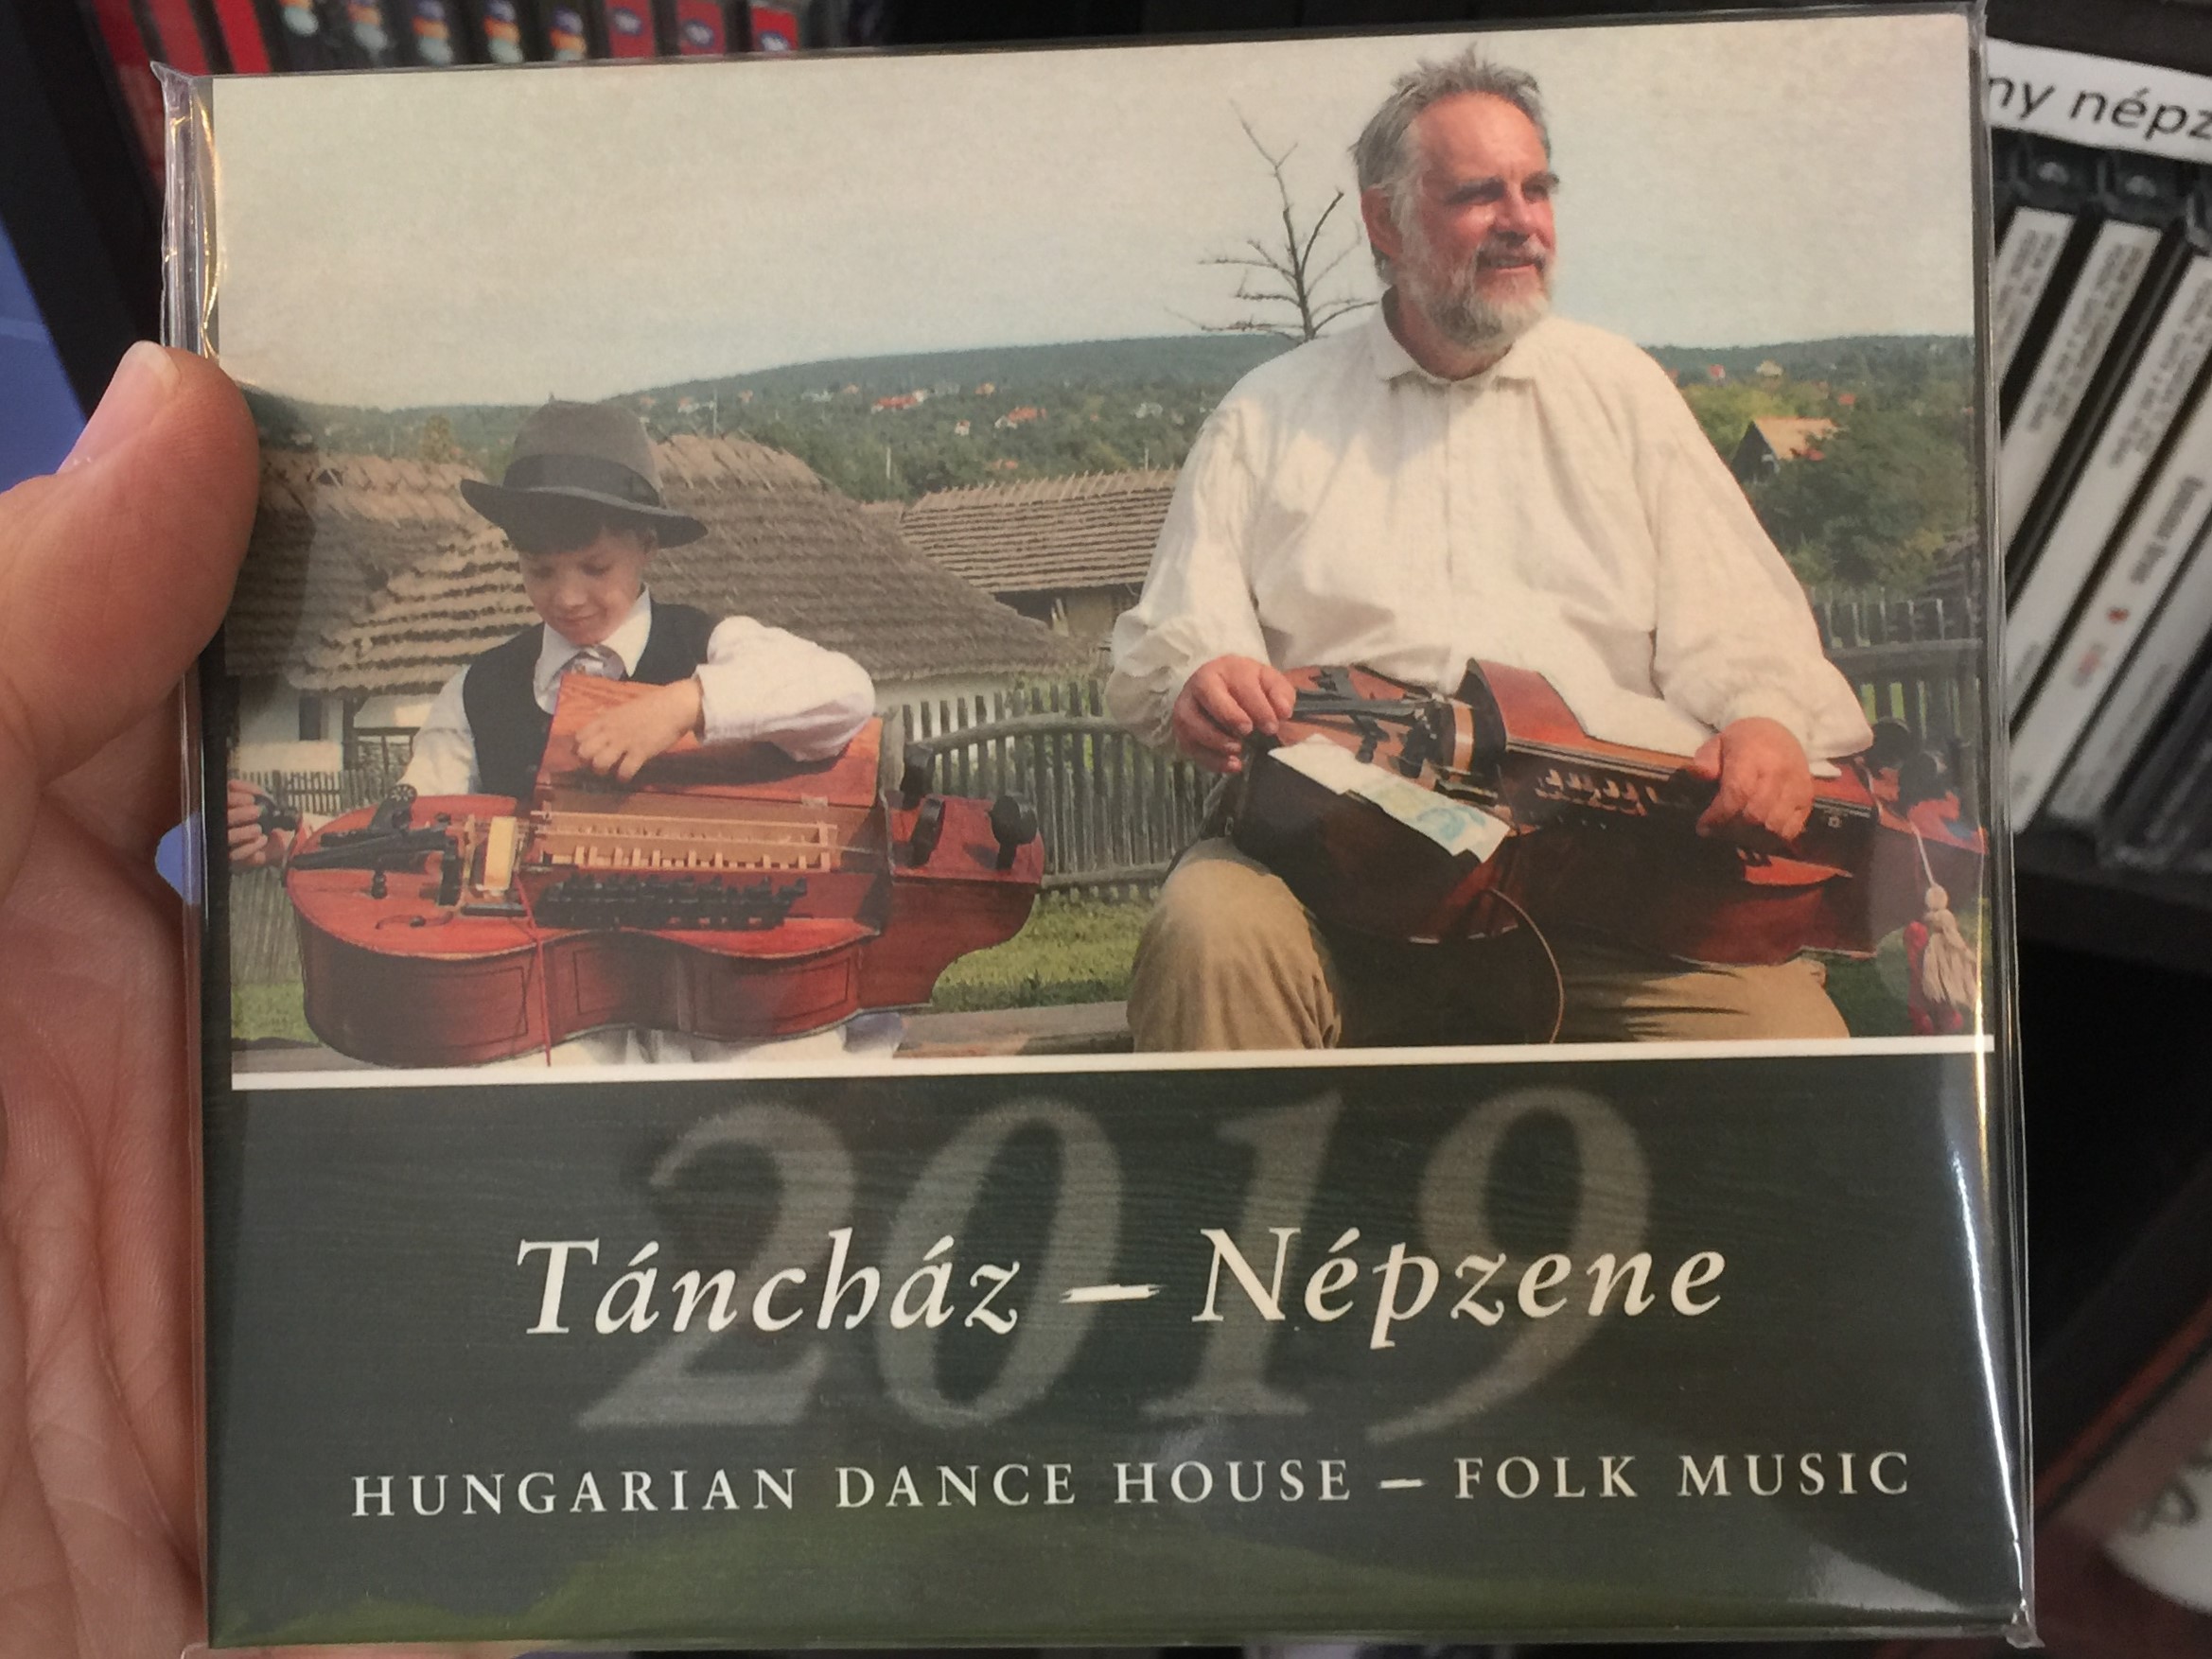 t-nch-z-n-pzene-2019-hungarian-dance-house-folk-music-hagyom-nyok-h-za-audio-cd-2019-5999882041650-1-.jpg